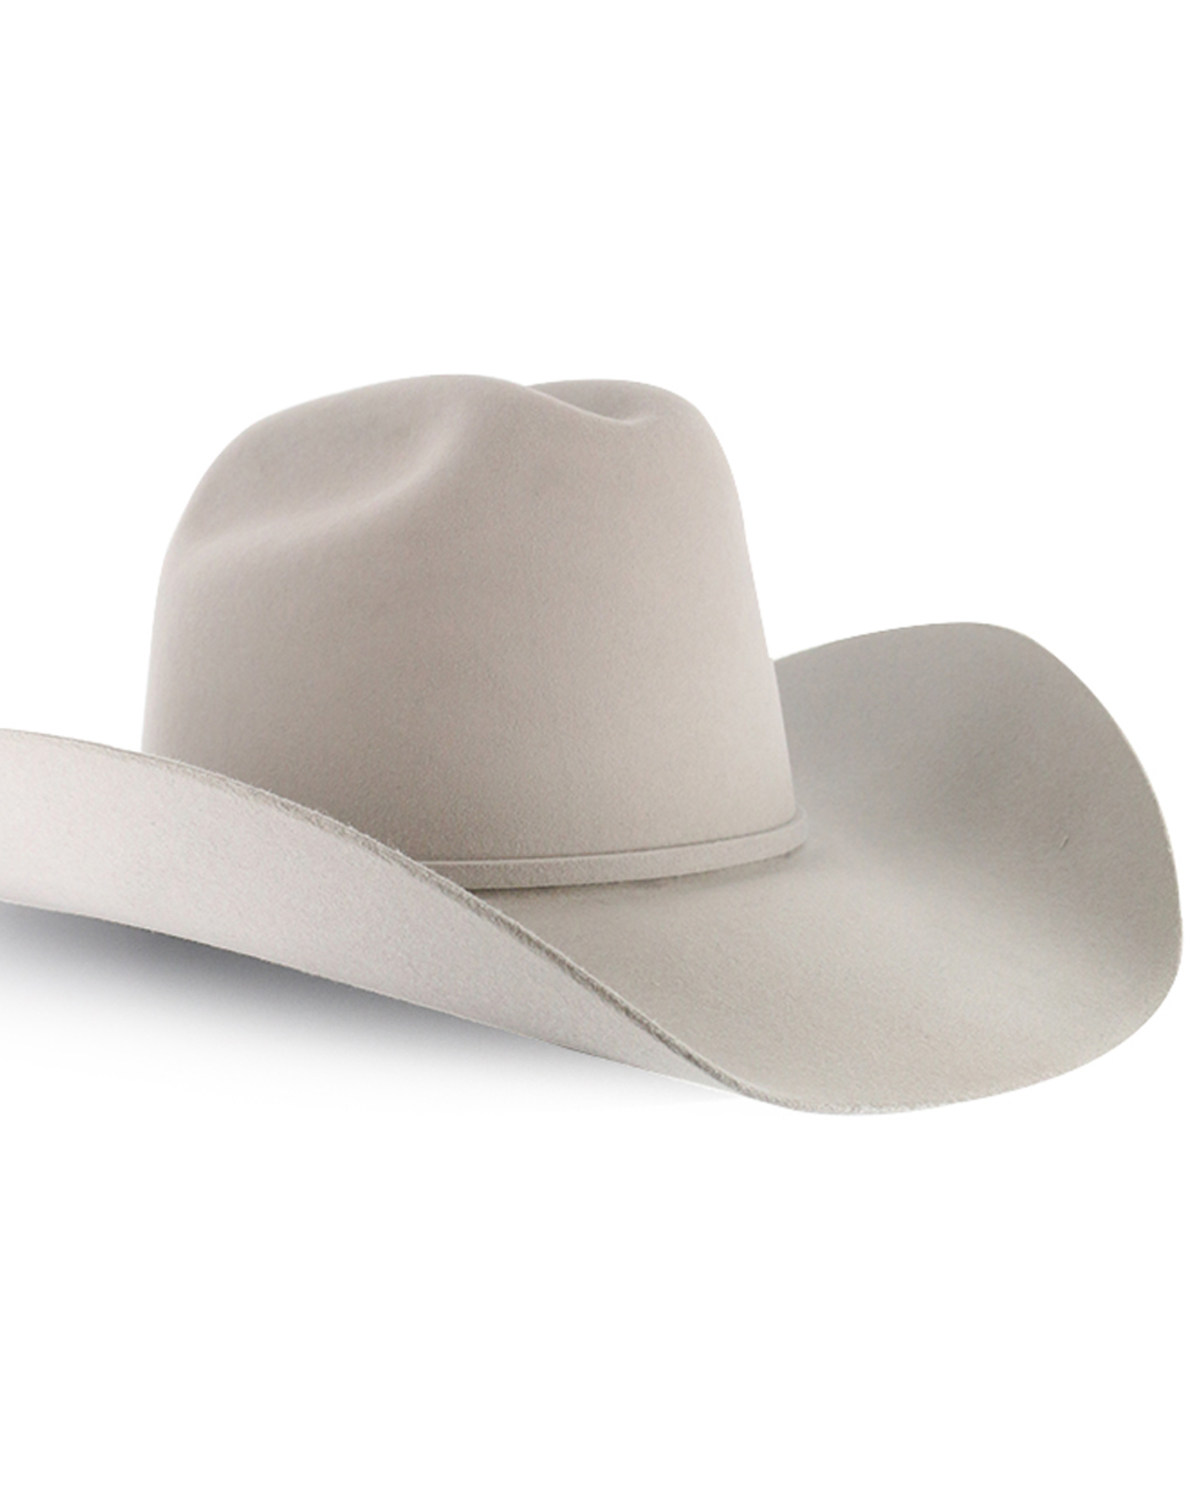 Rodeo King 7X Felt Cowboy Hat